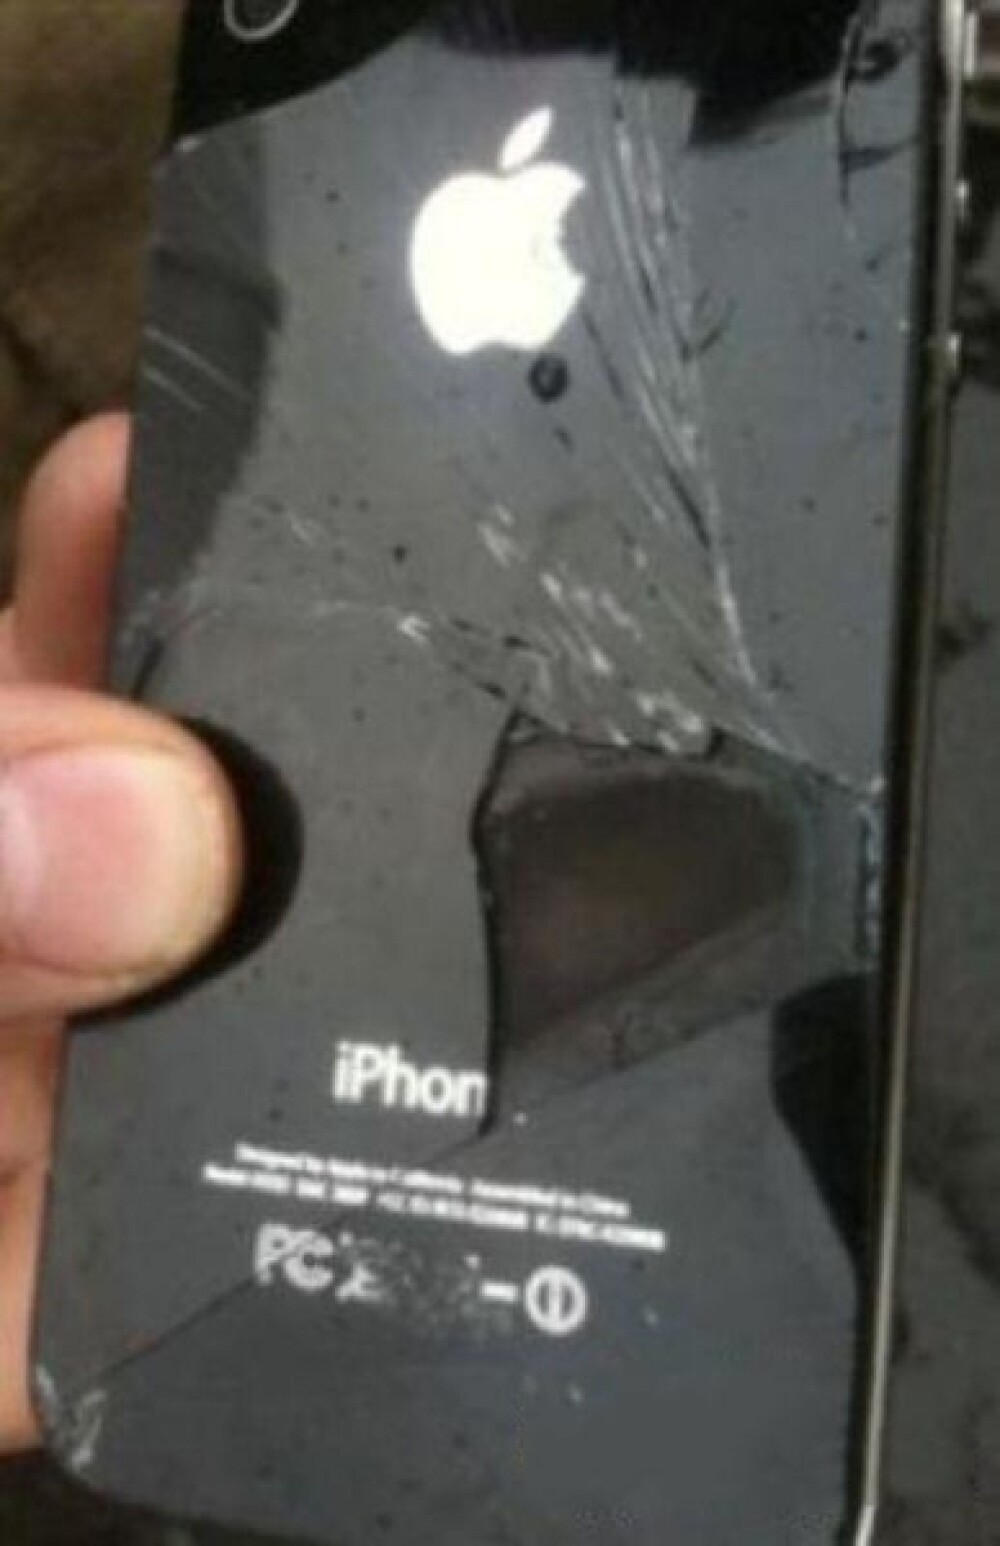 Un barbat din China a ramas diform dupa ce un iPhone i-a explodat in mana - Imaginea 1